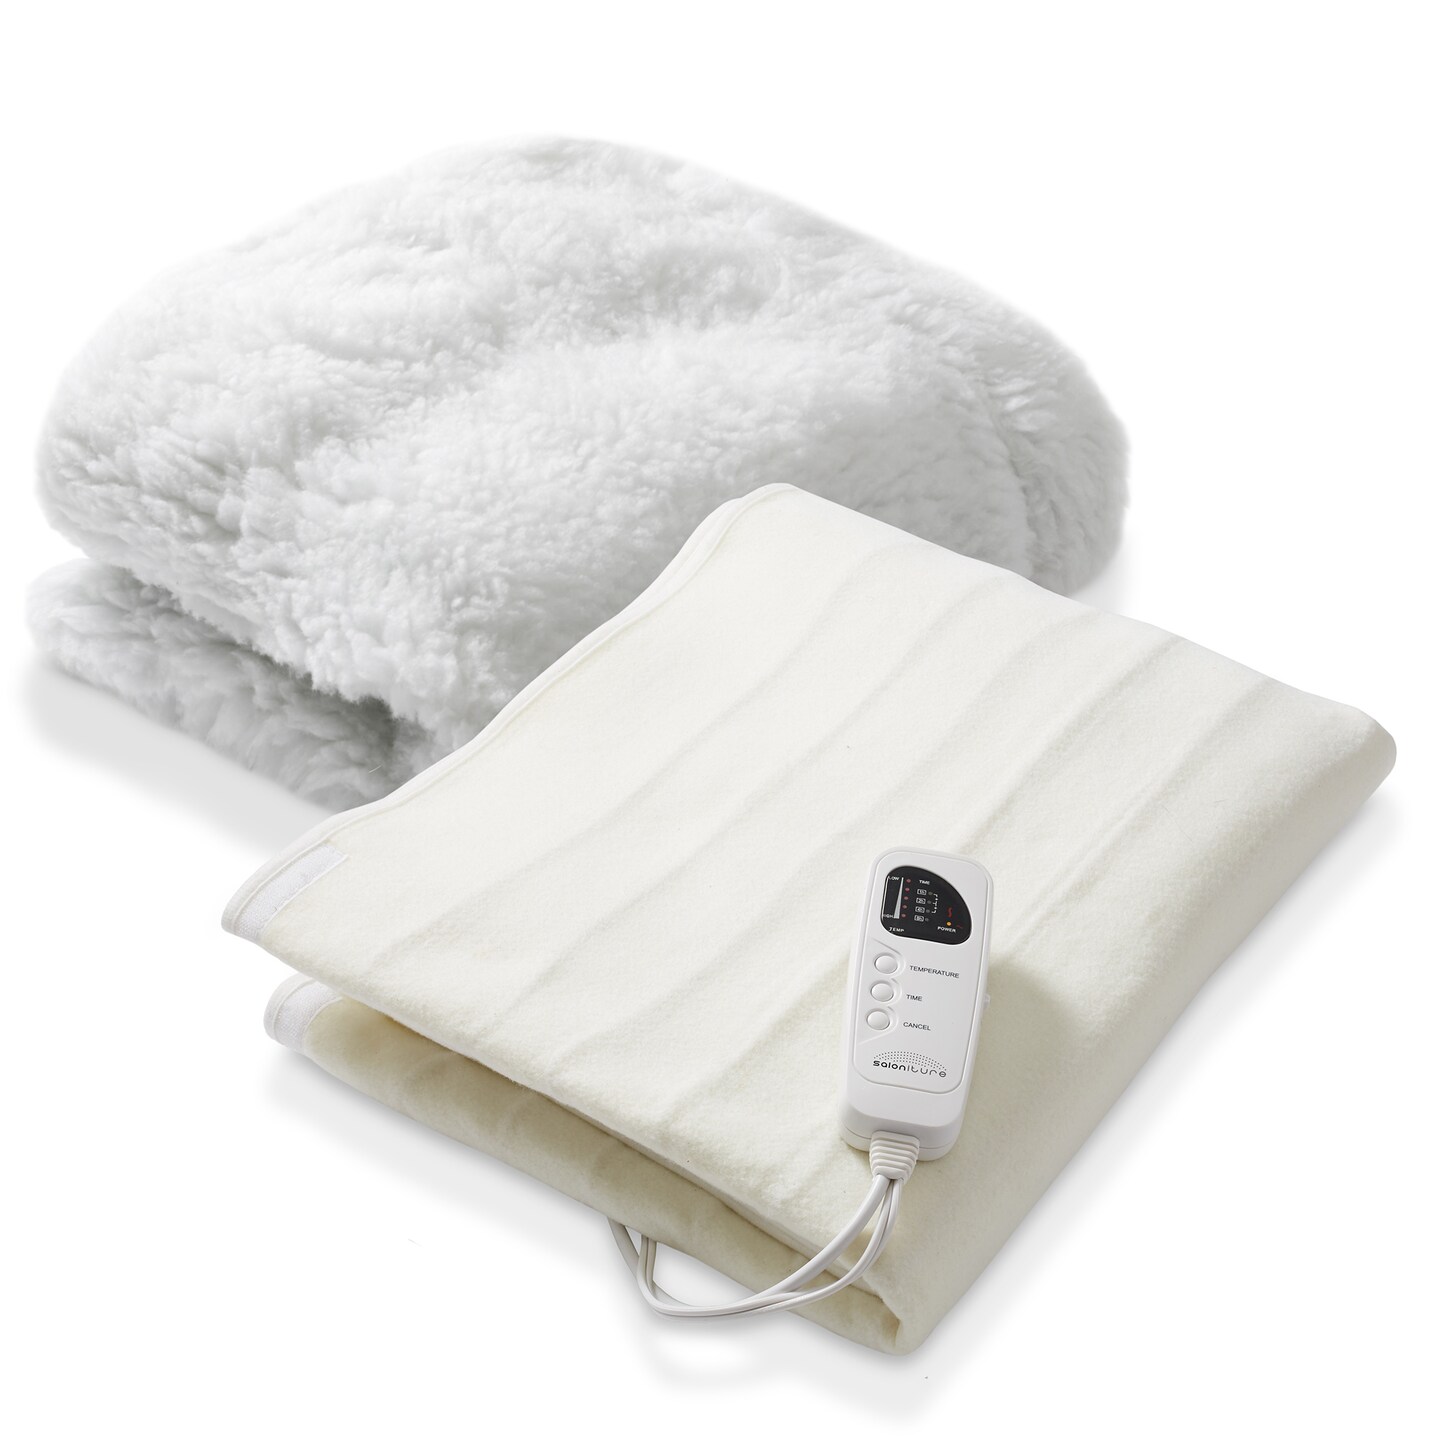 Digital Massage Table Warming Pad 